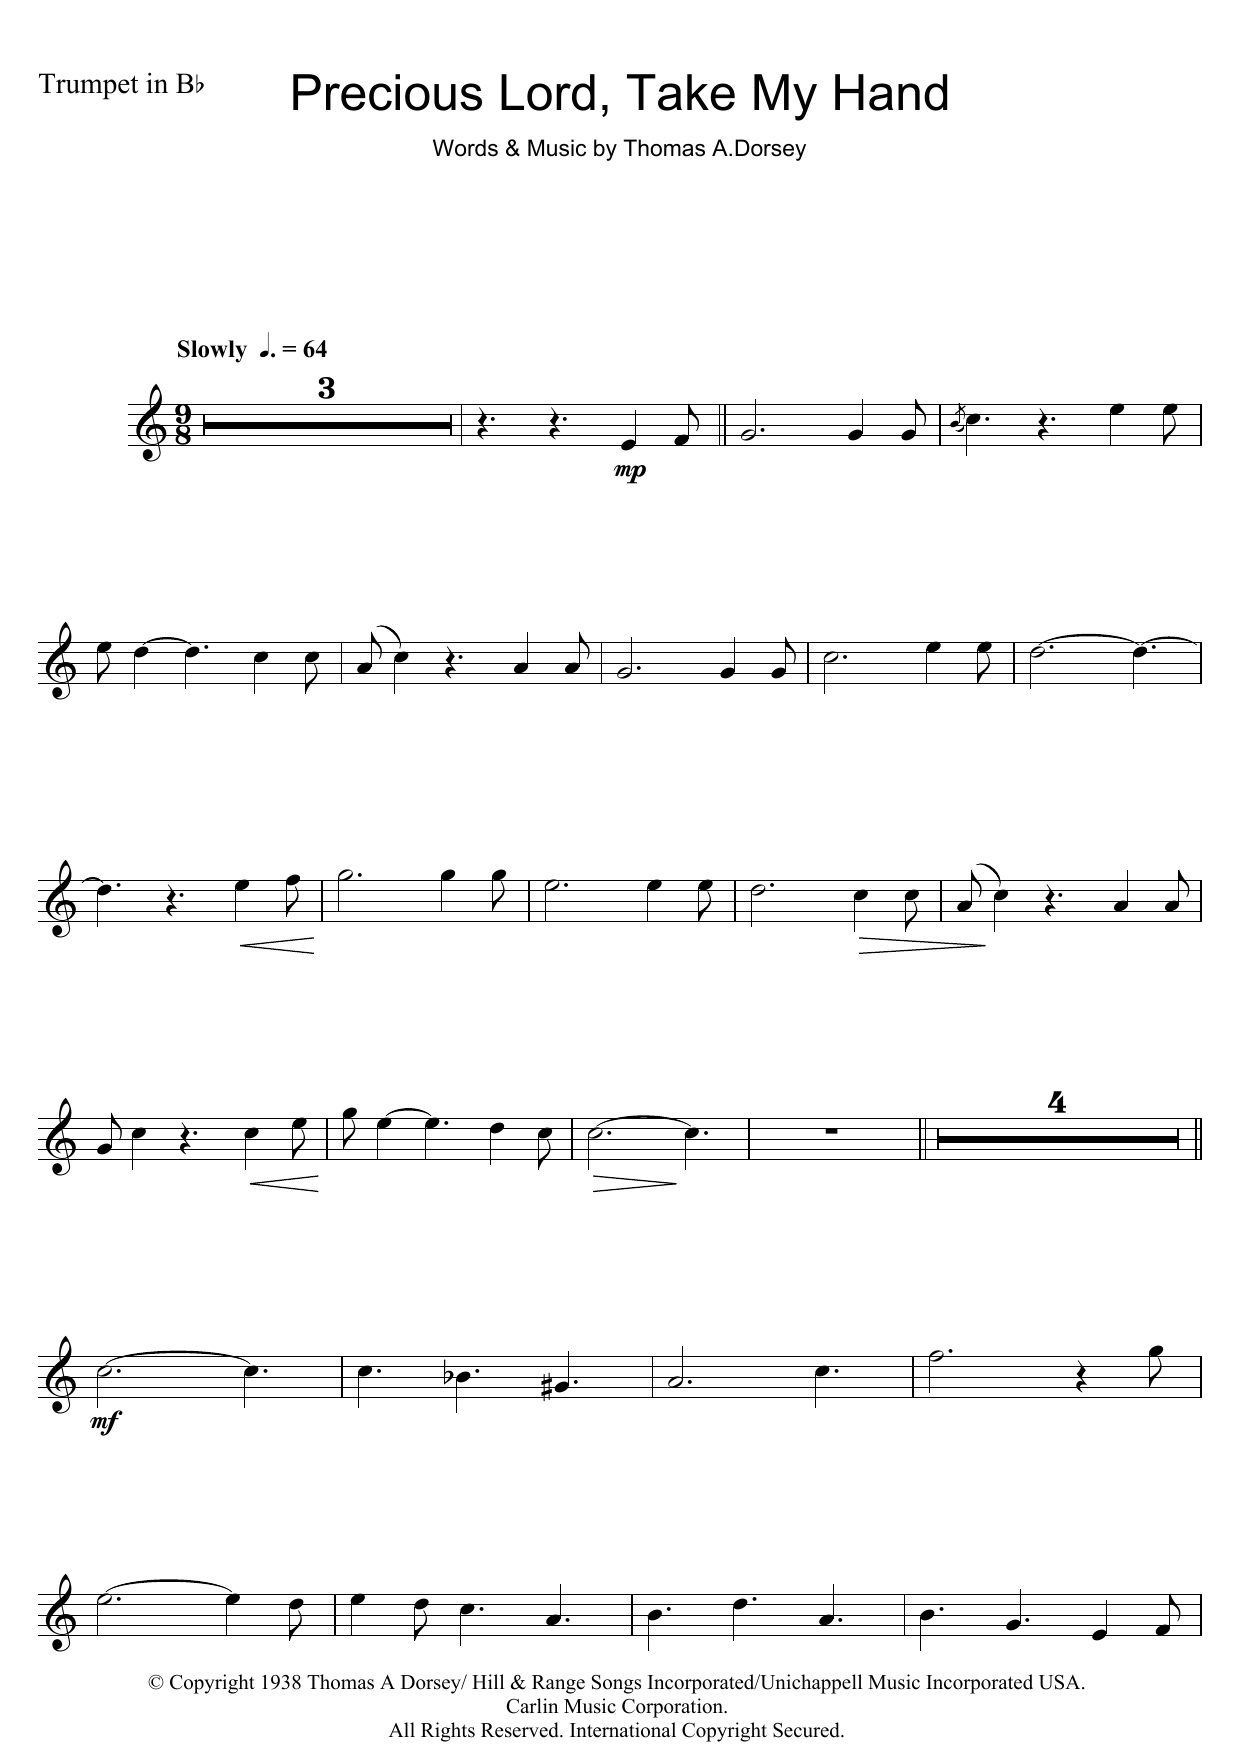 Aretha Franklin Precious Lord, Take My Hand (Take My Hand, Precious Lord) Sheet Music Notes & Chords for Tenor Saxophone - Download or Print PDF